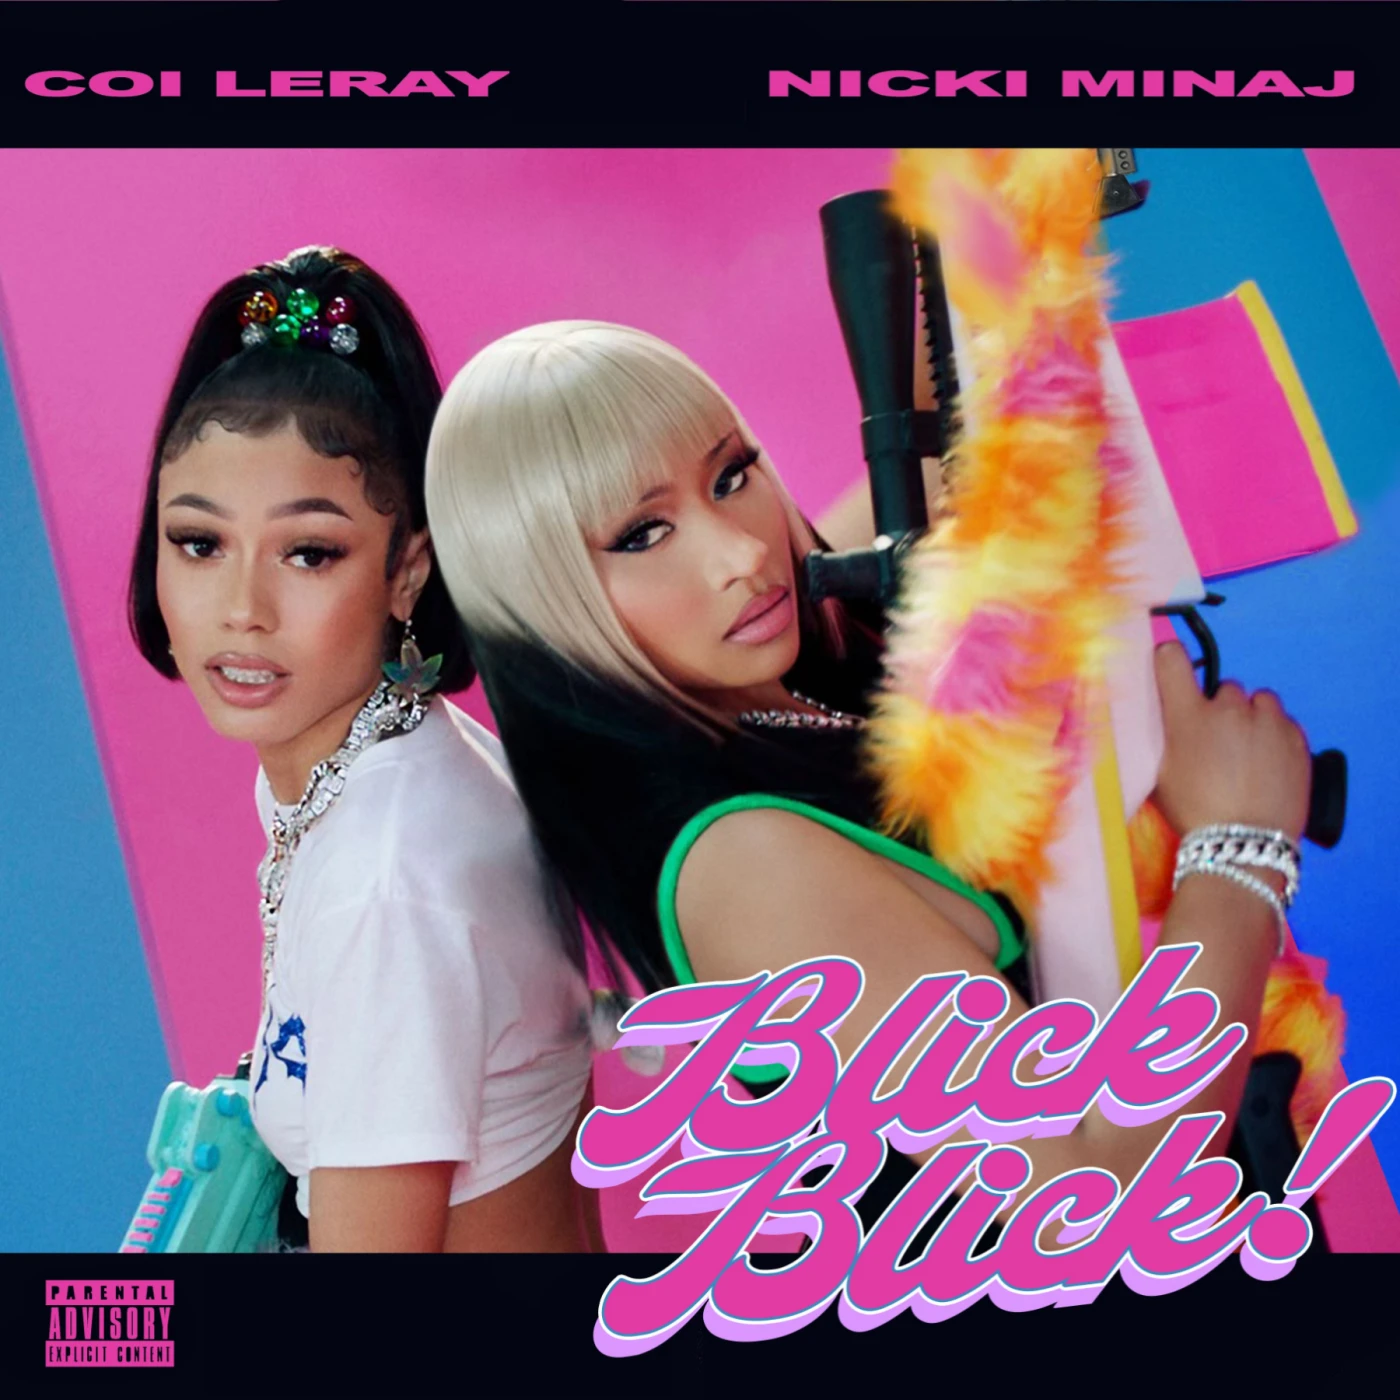 Coi Leray and Nicki Minaj blick blick